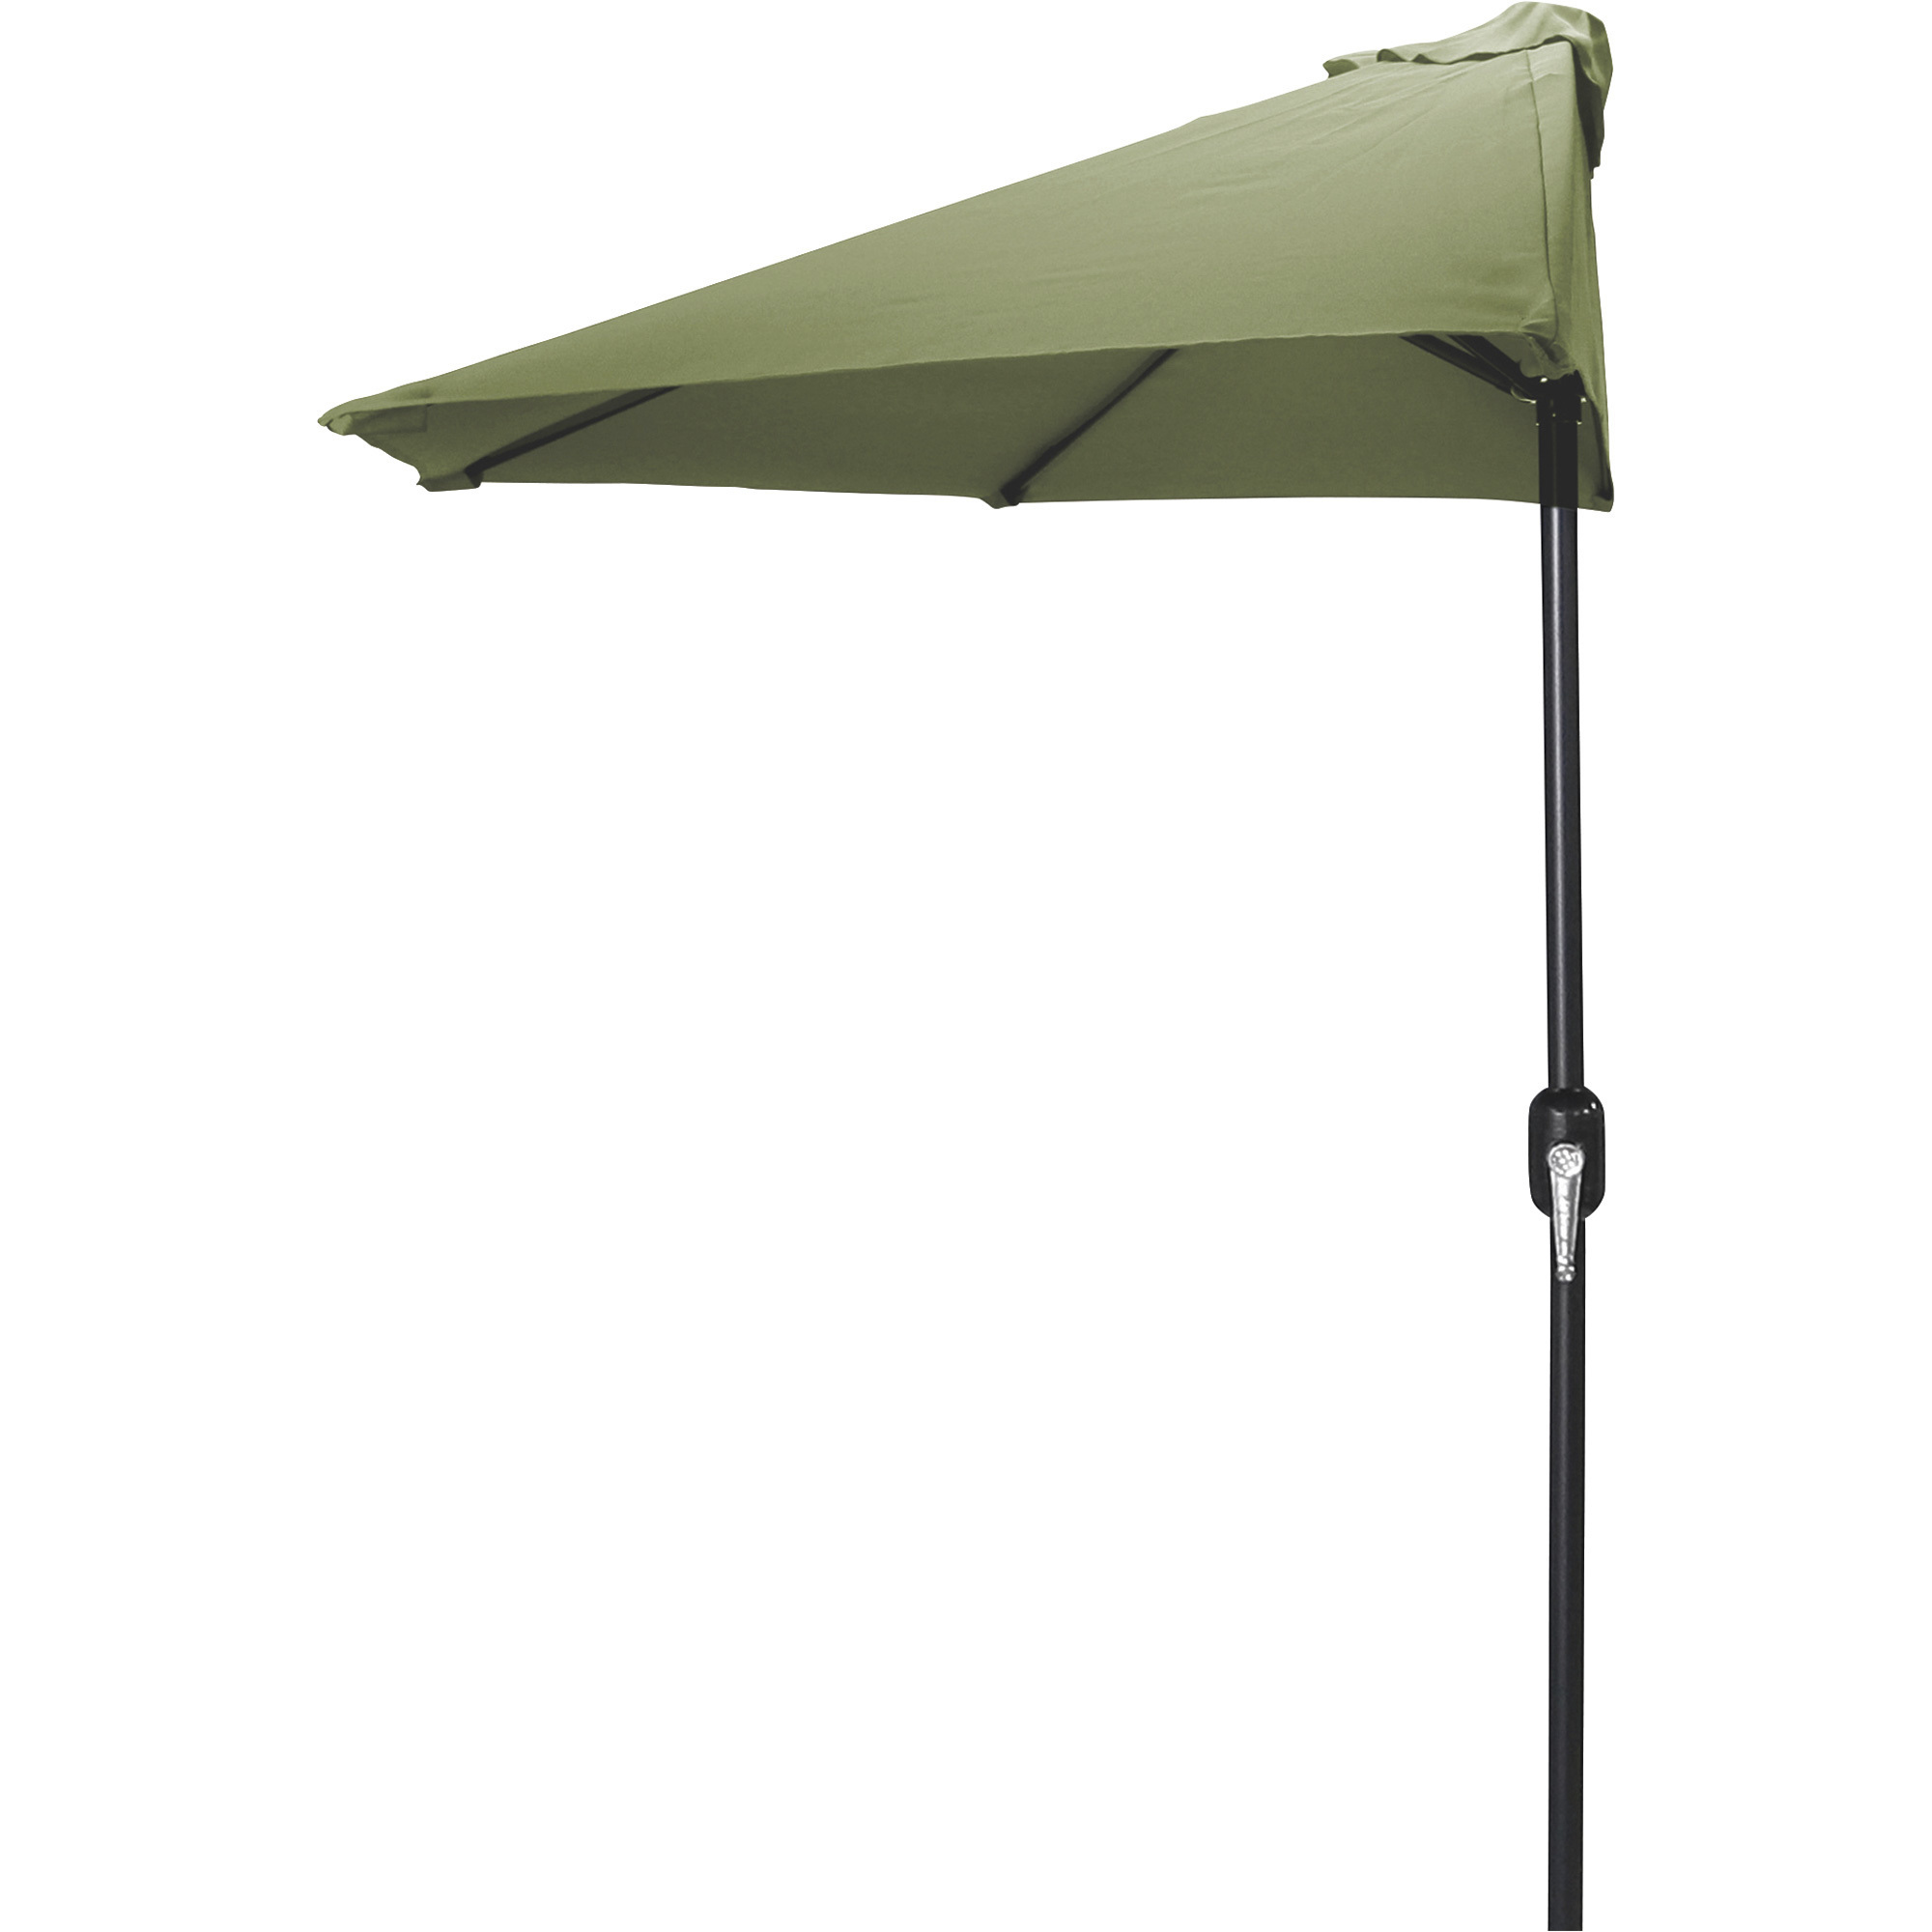 Jordan Manufacturing 9ft. Half Market Crank Patio Umbrella, Olive, Model USH904L-OLIVE